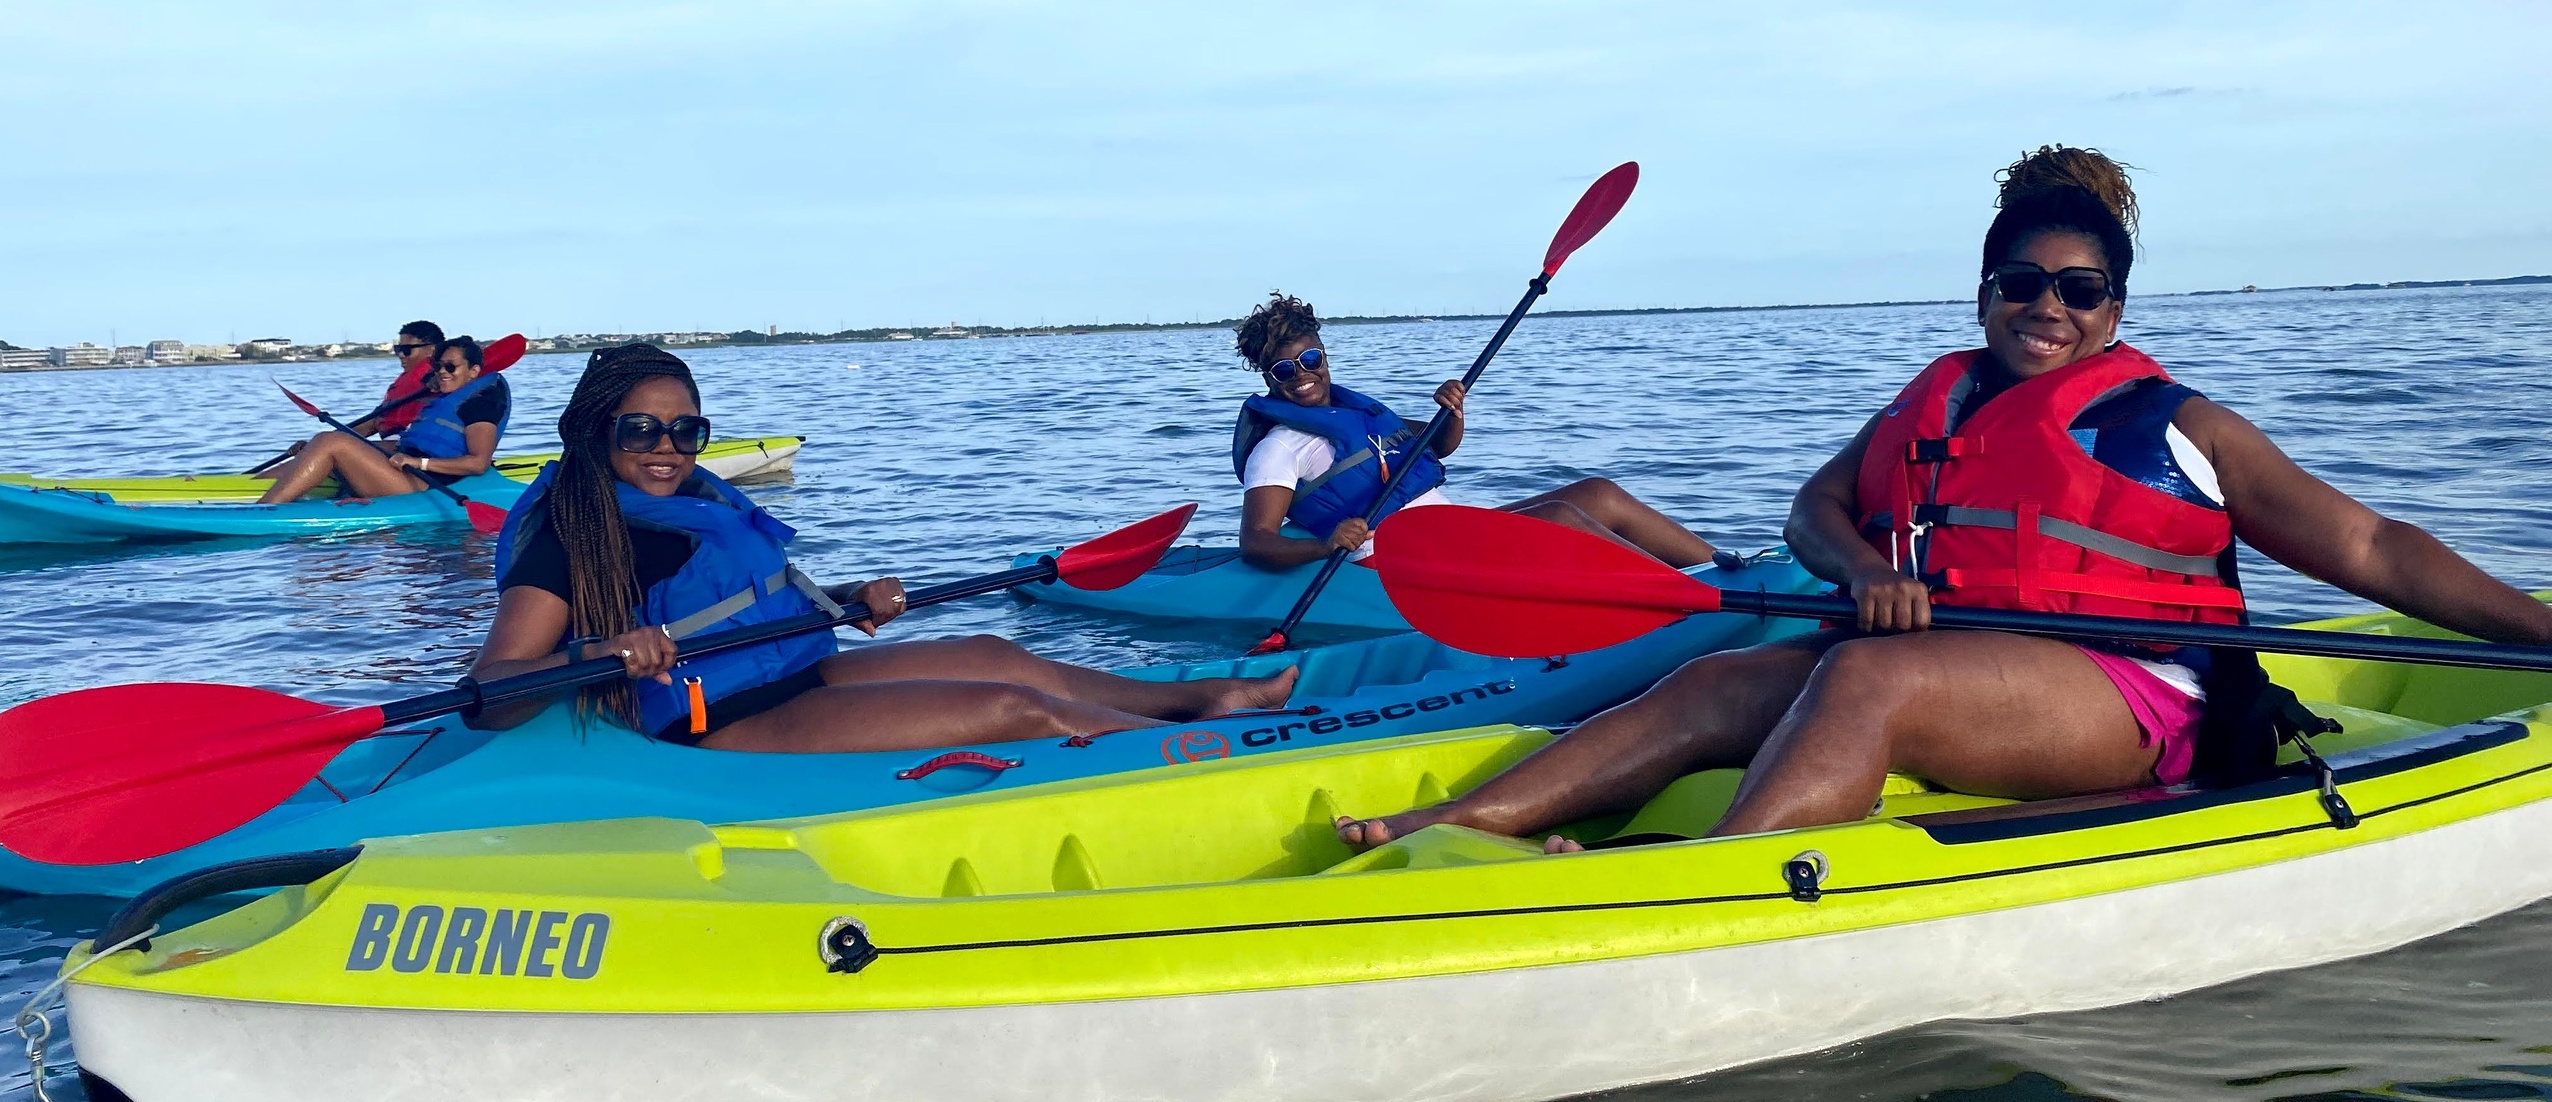 Big Kayak Rental in Dewey Beach